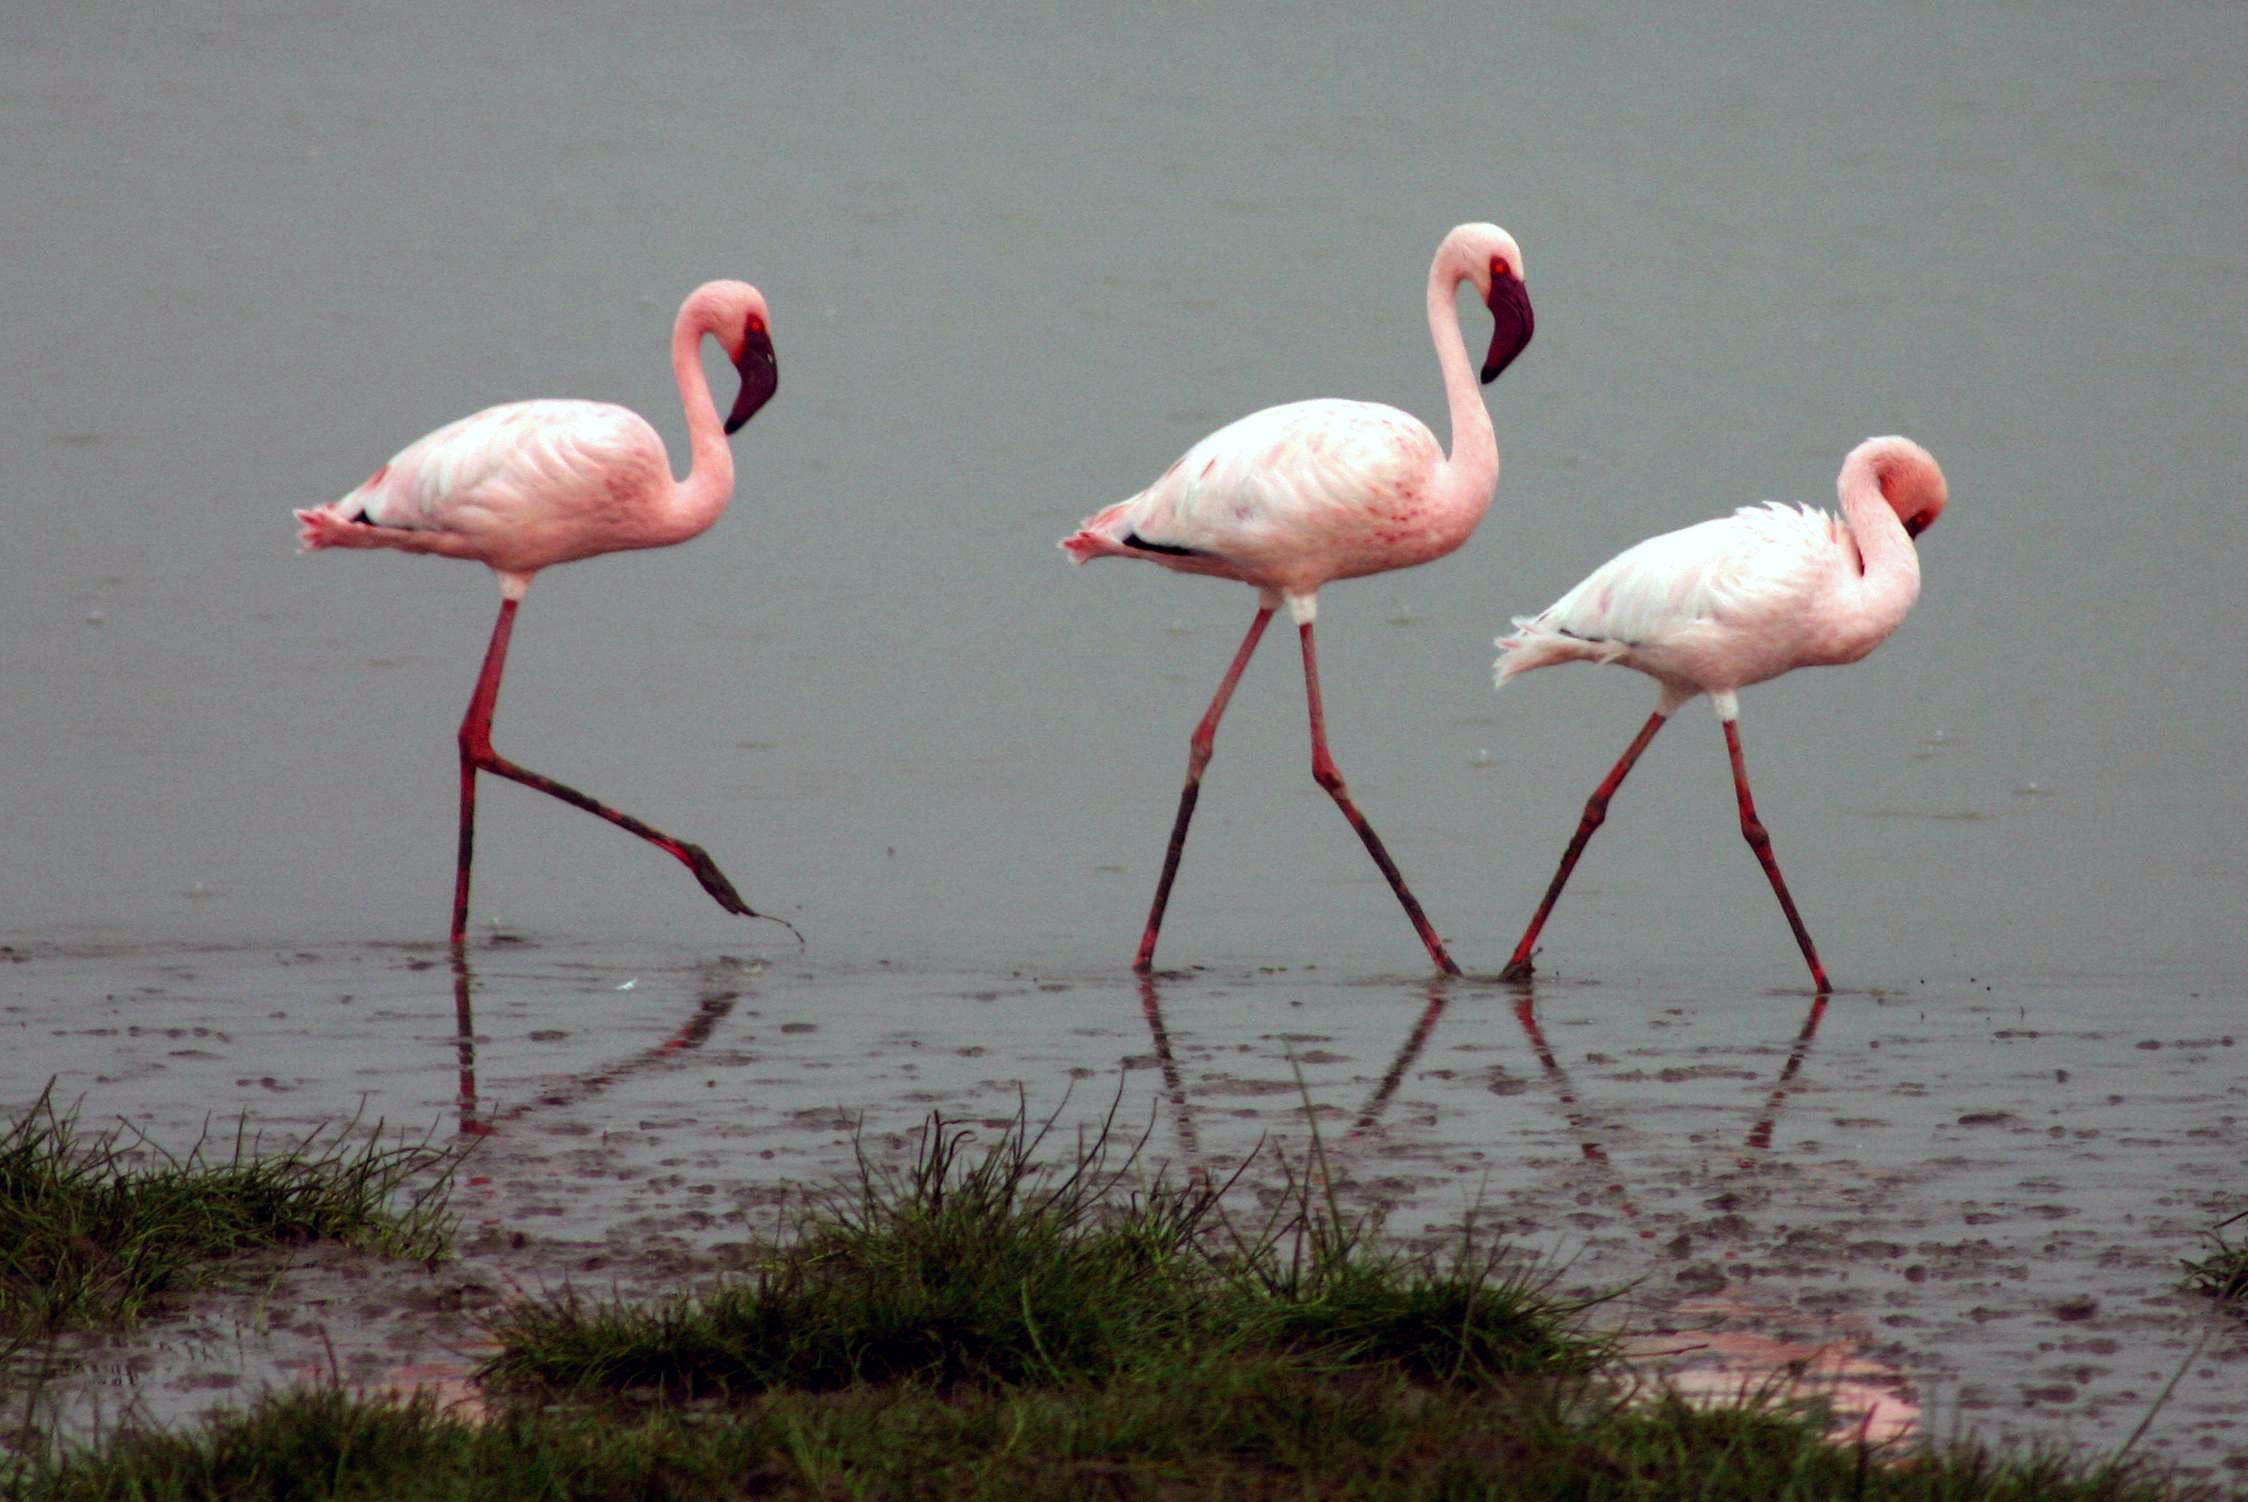 Iraqi Flamingo Poaching Prompts Backlash - The Caravel